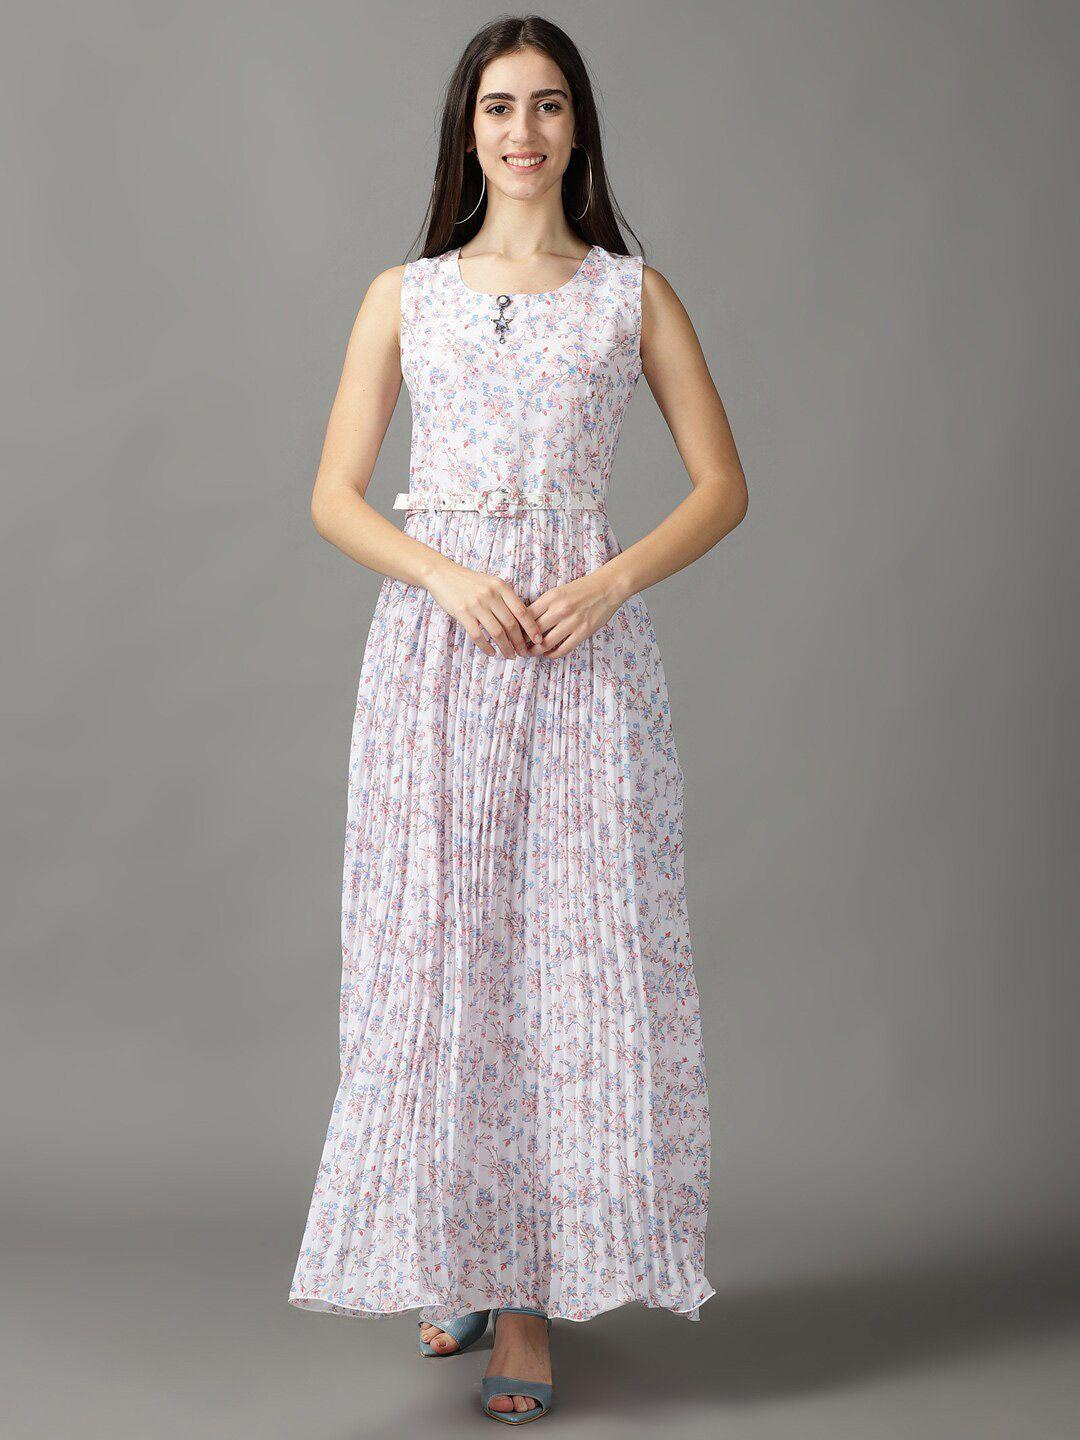 showoff-floral-printed-accordion-pleated-a-line-midi-dress